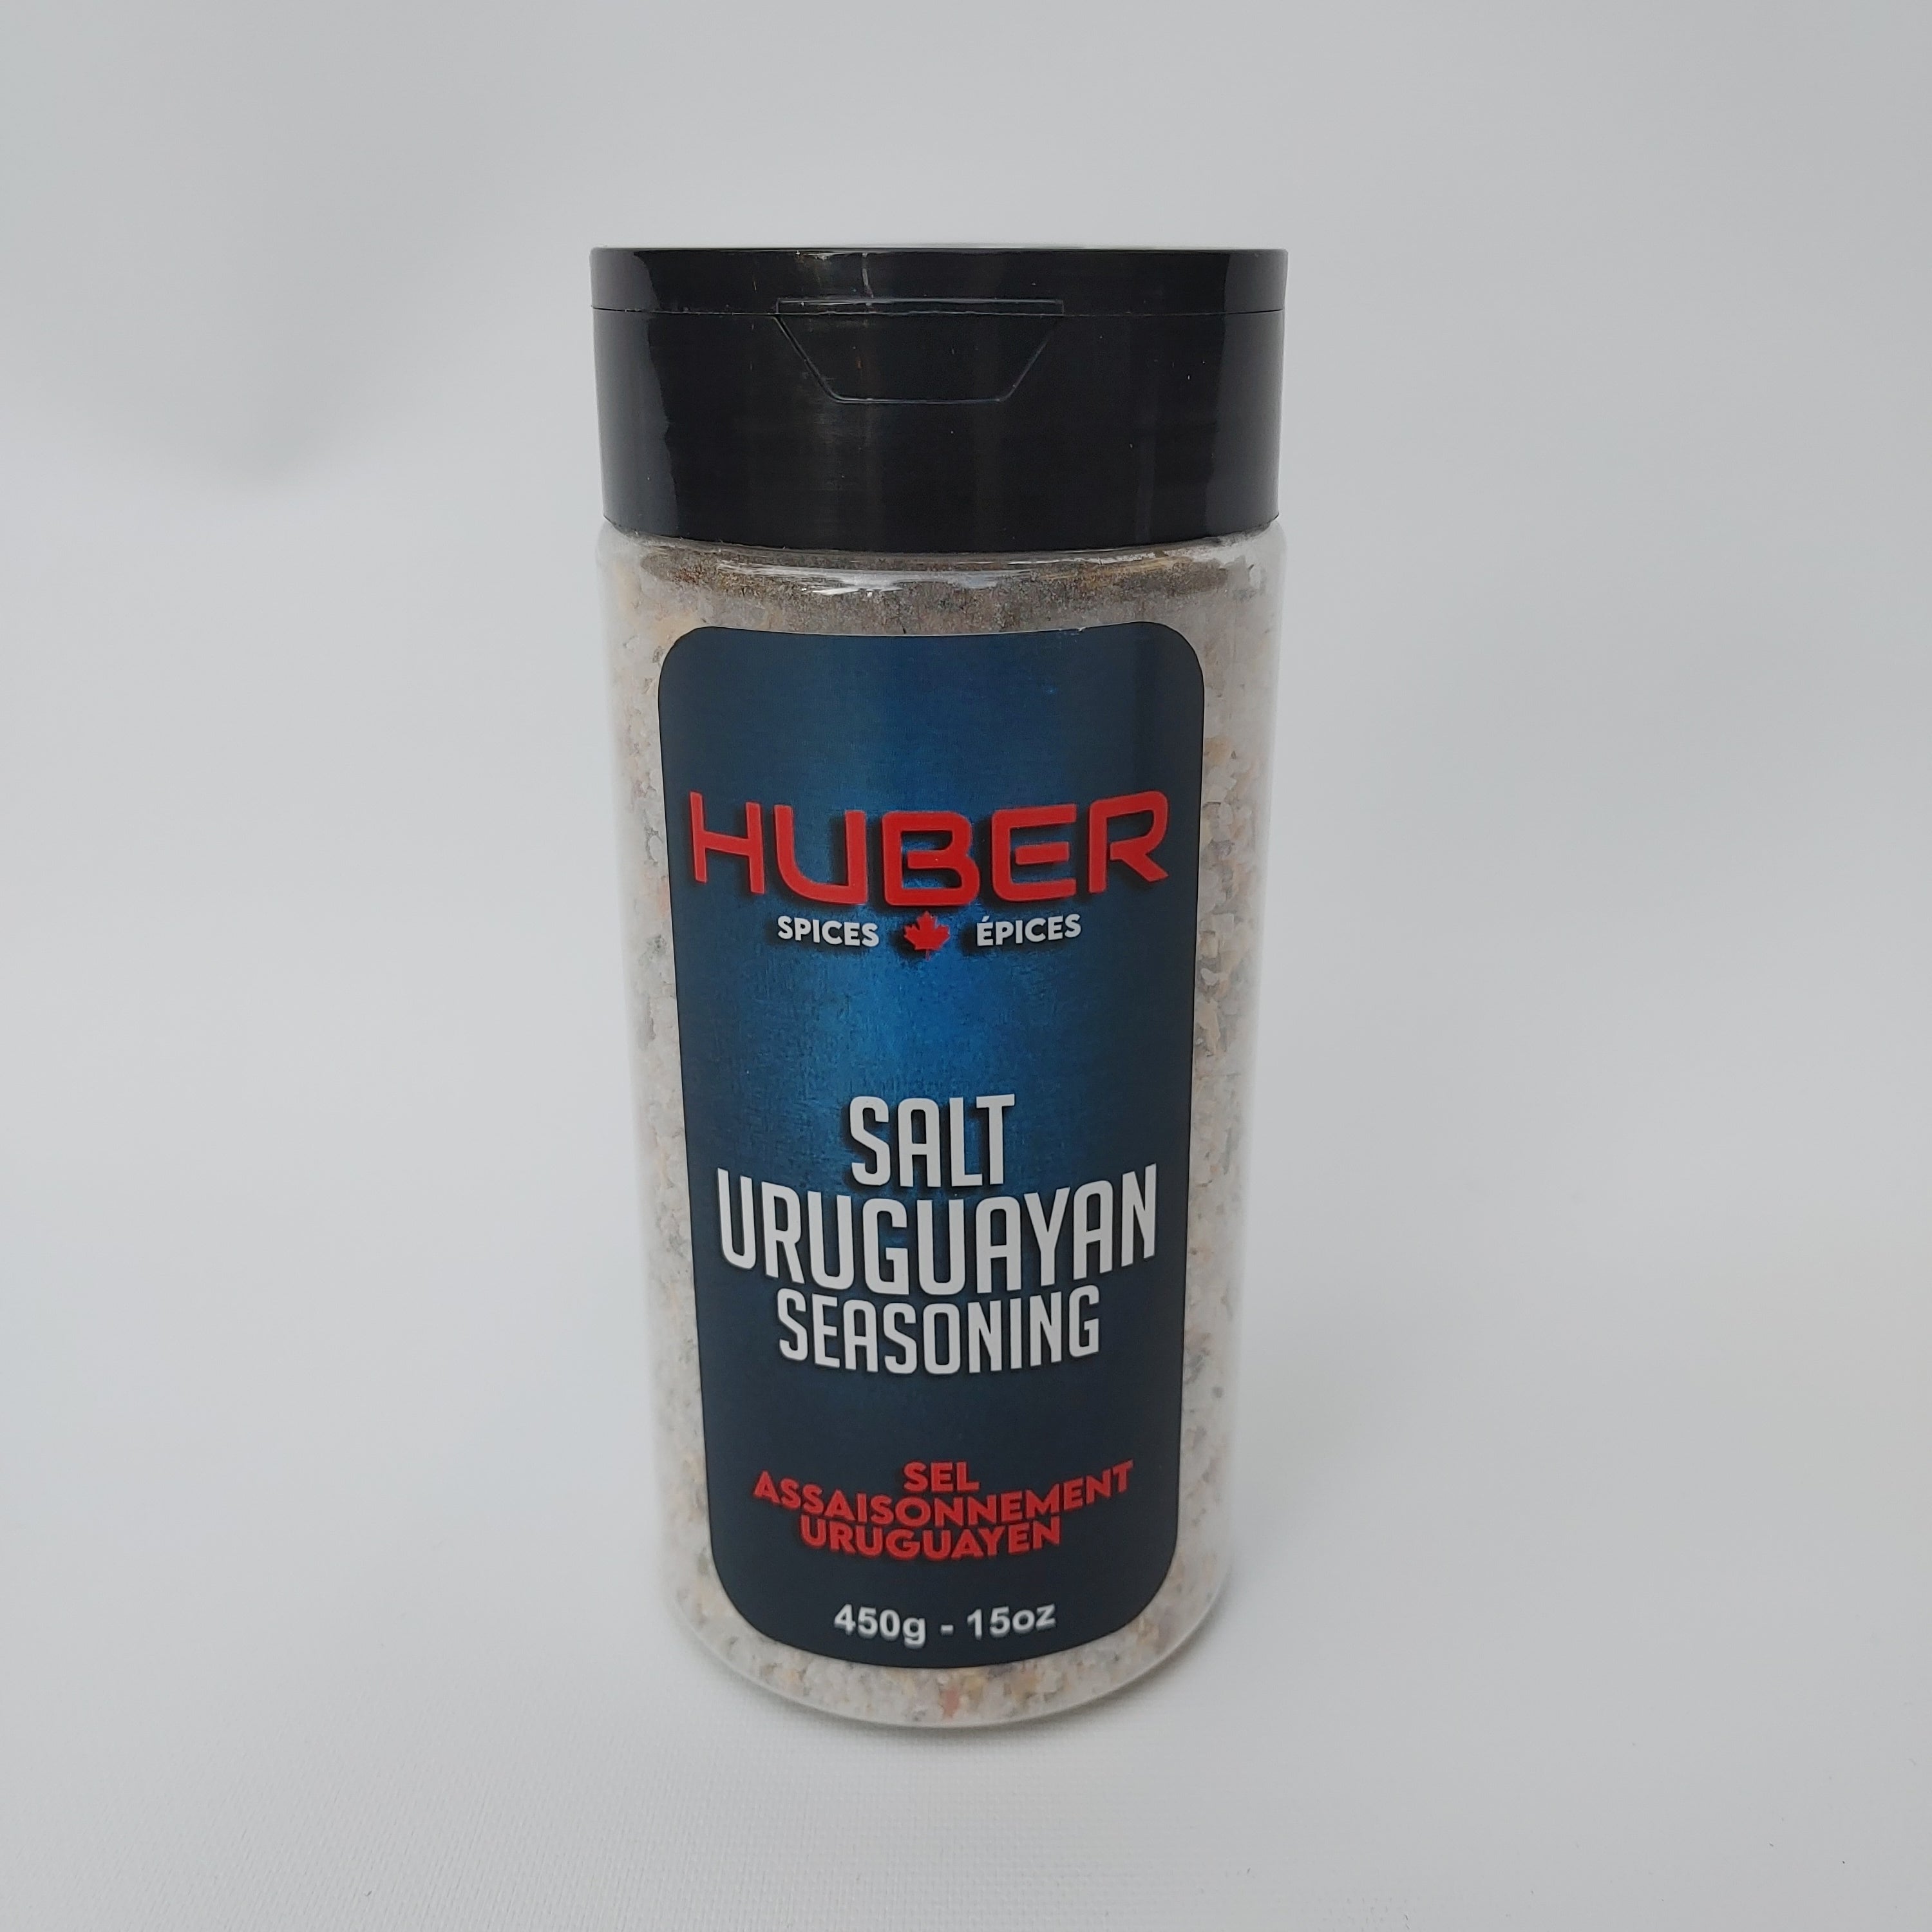 HUBER - Salt Uruguayan Seasoning